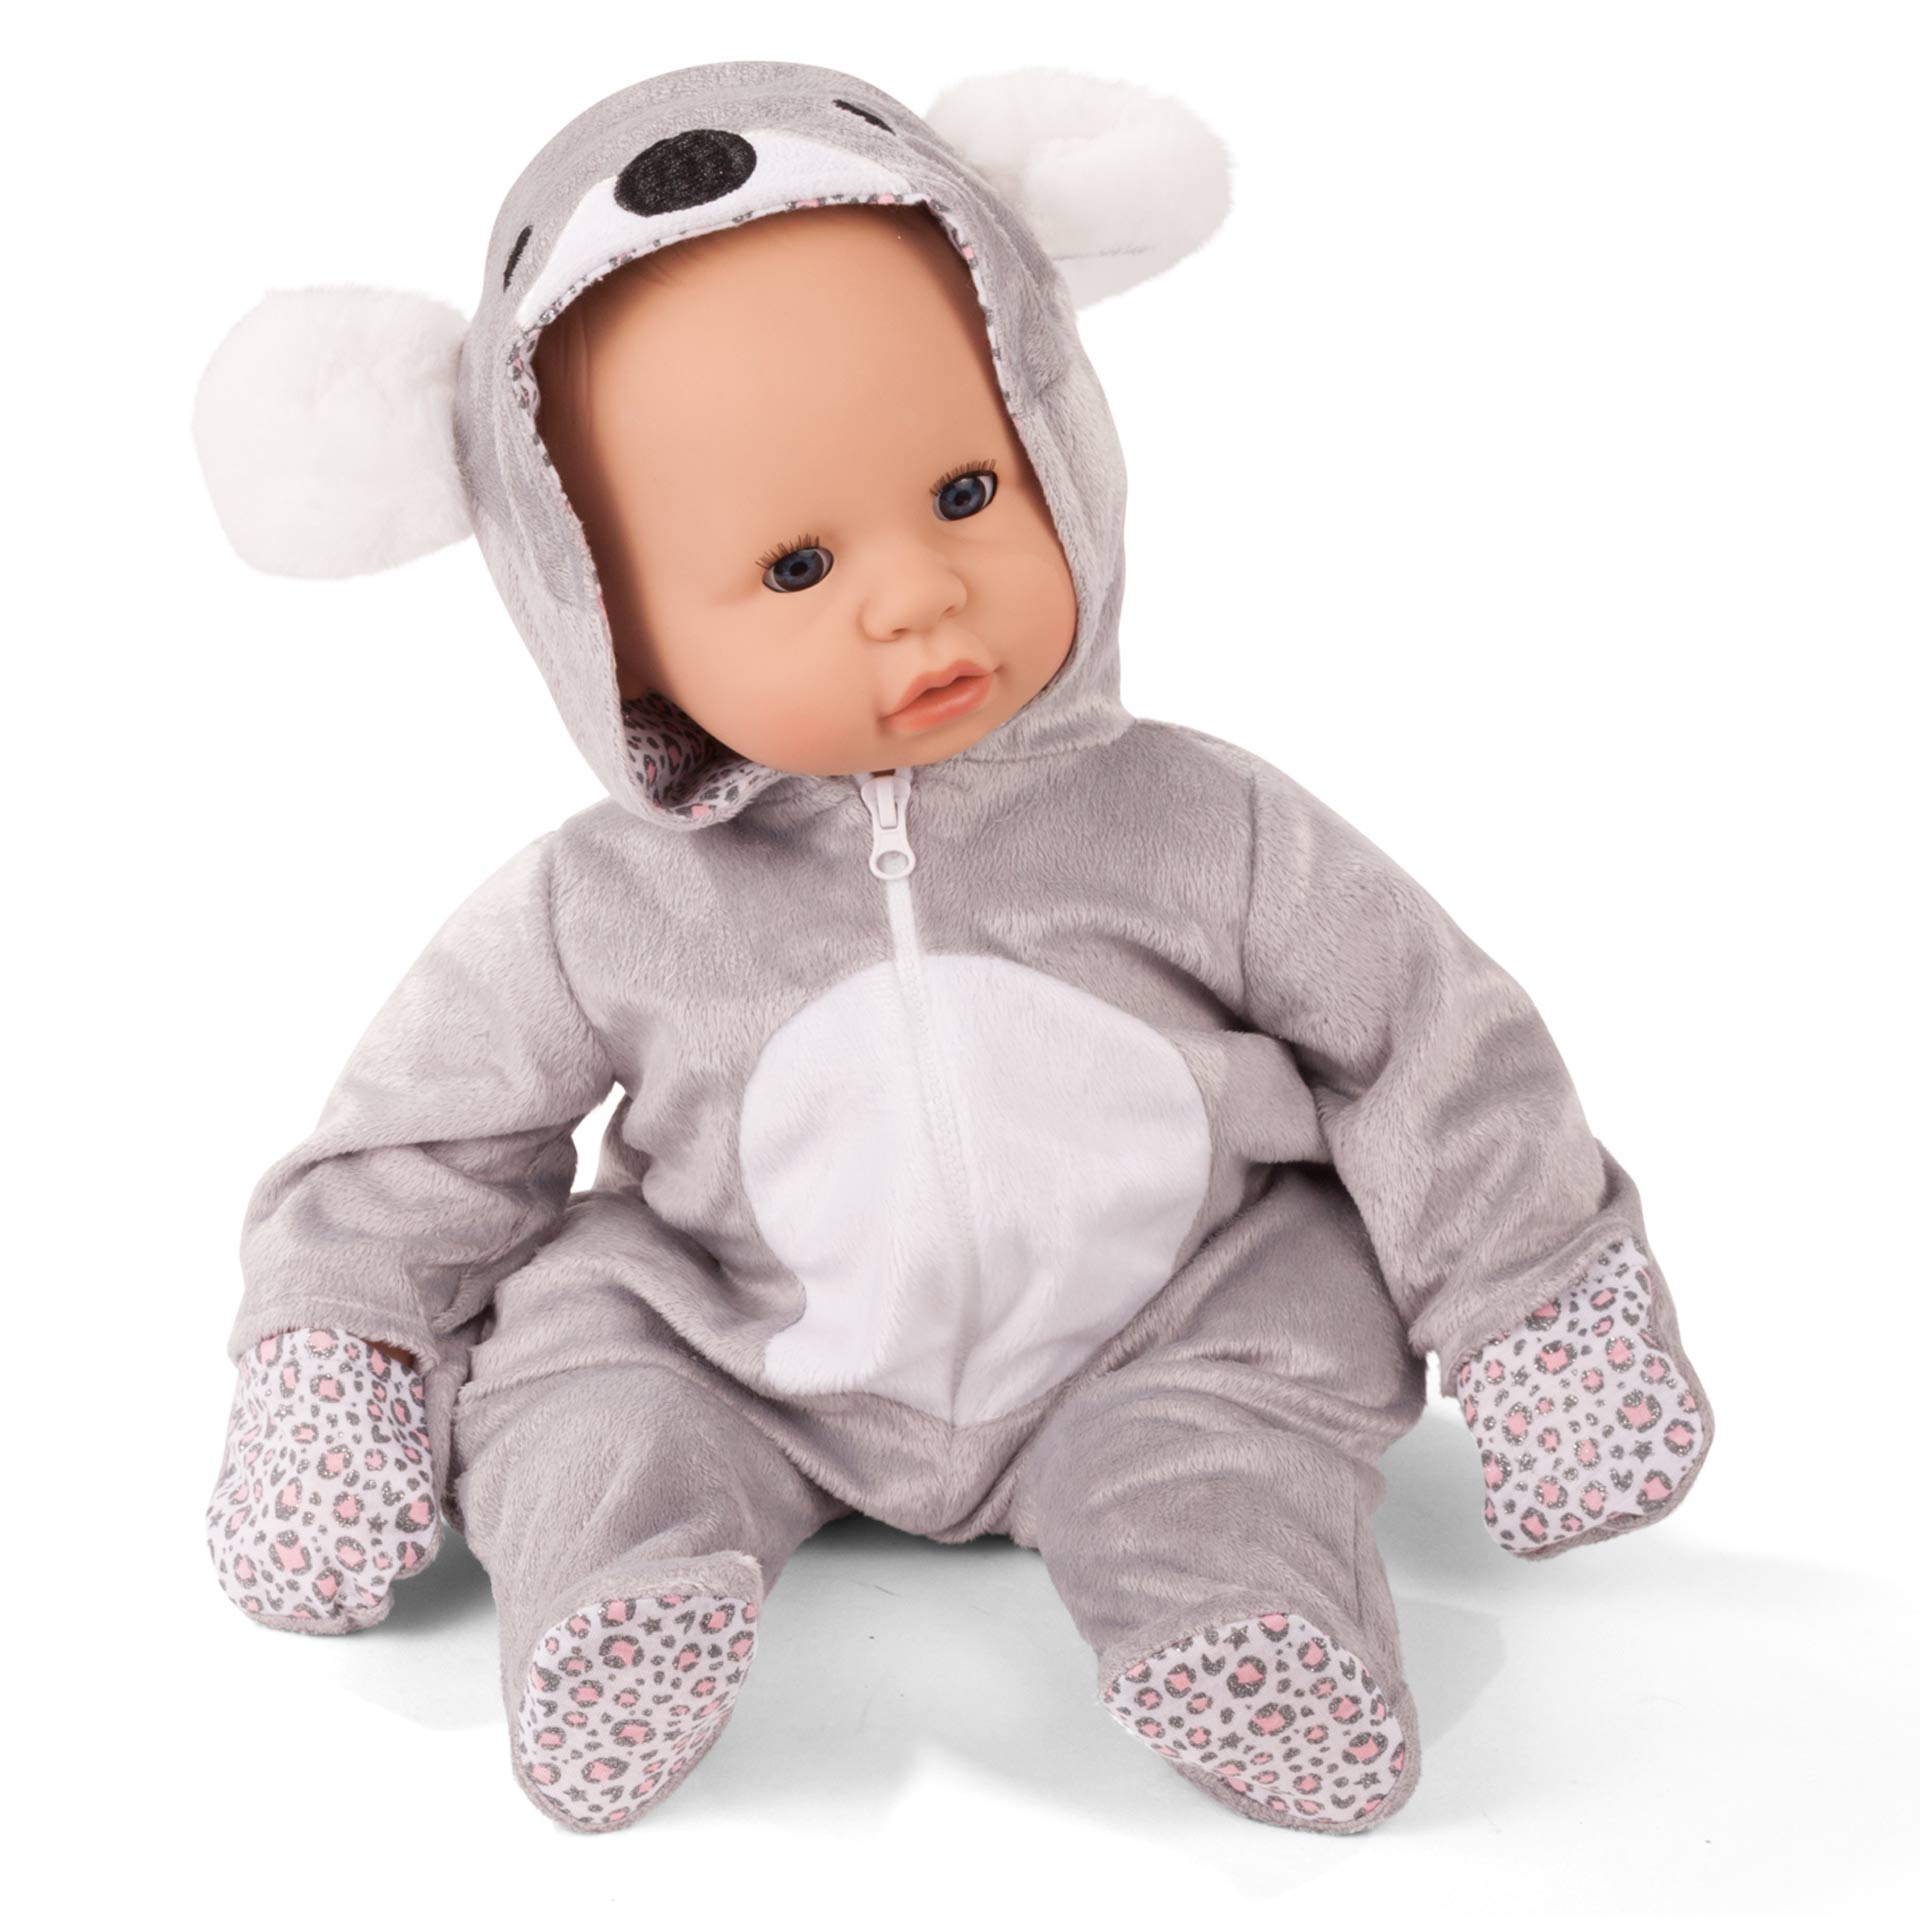 3403040-babyset-immer-schick-bekleidung-koala-onesie-grau-goetz